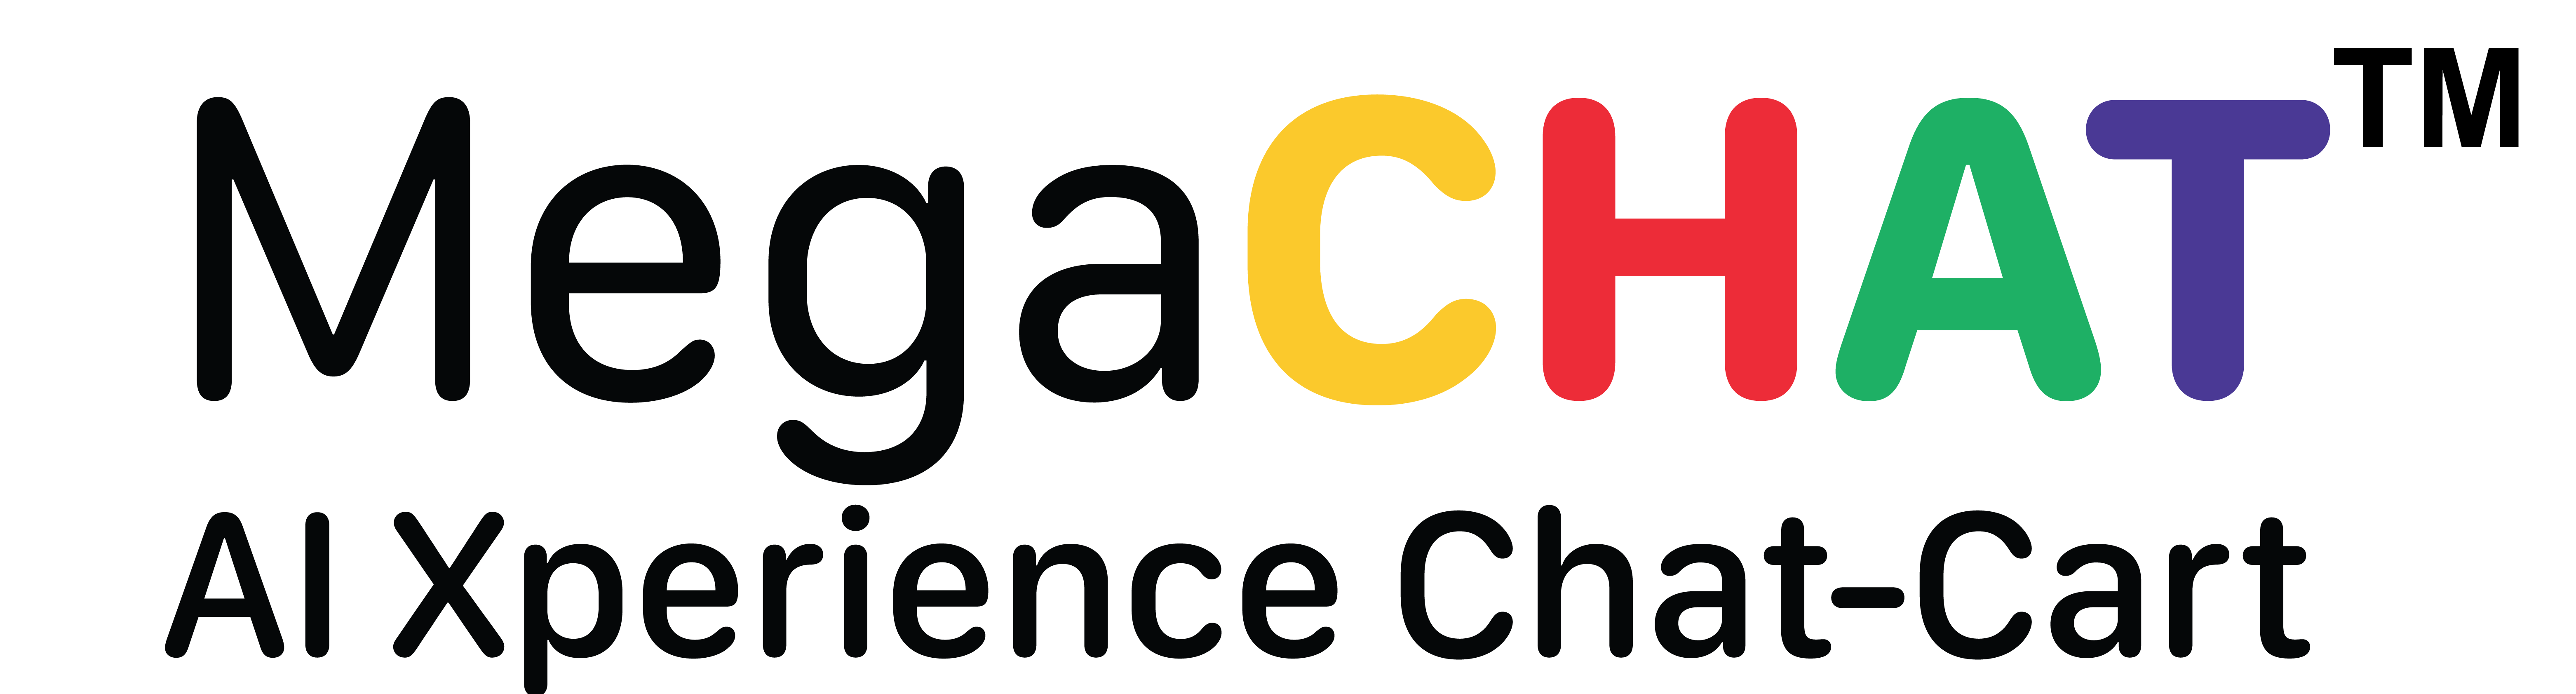 Megachat Logo